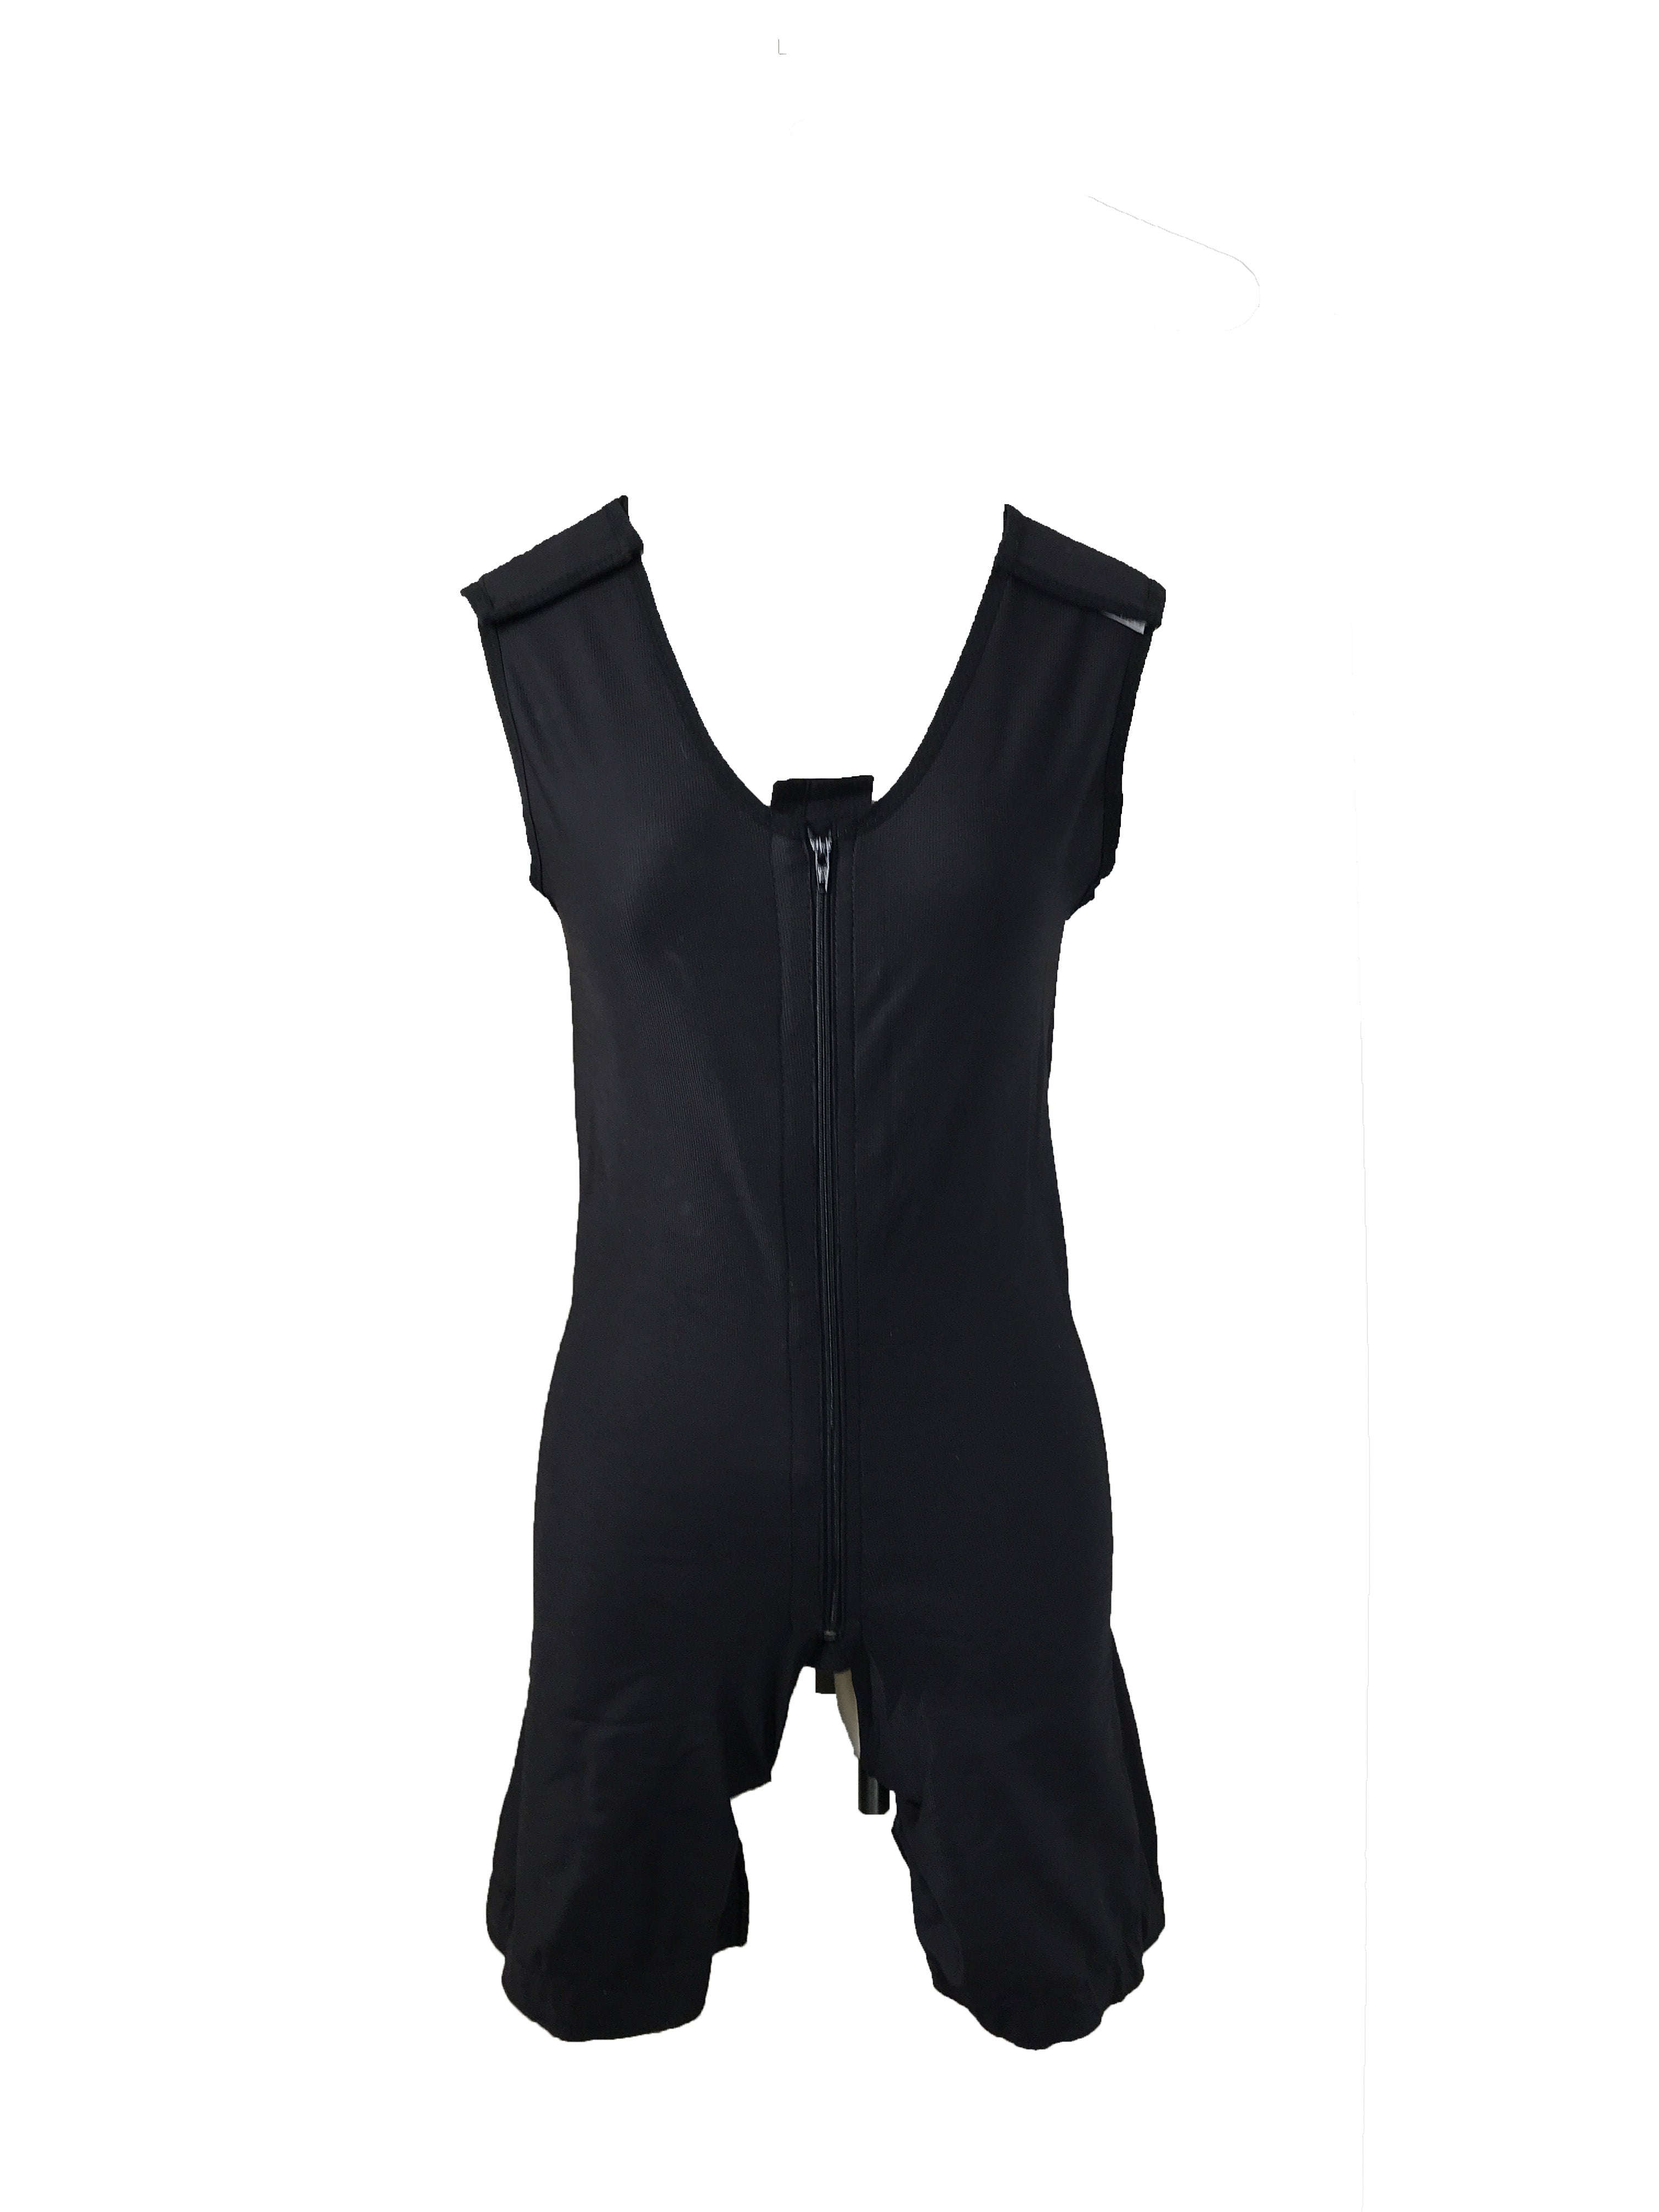 Marena ComfortWear Compression and Support Garment Black Bodysuit Men' –  MSU Surplus Store